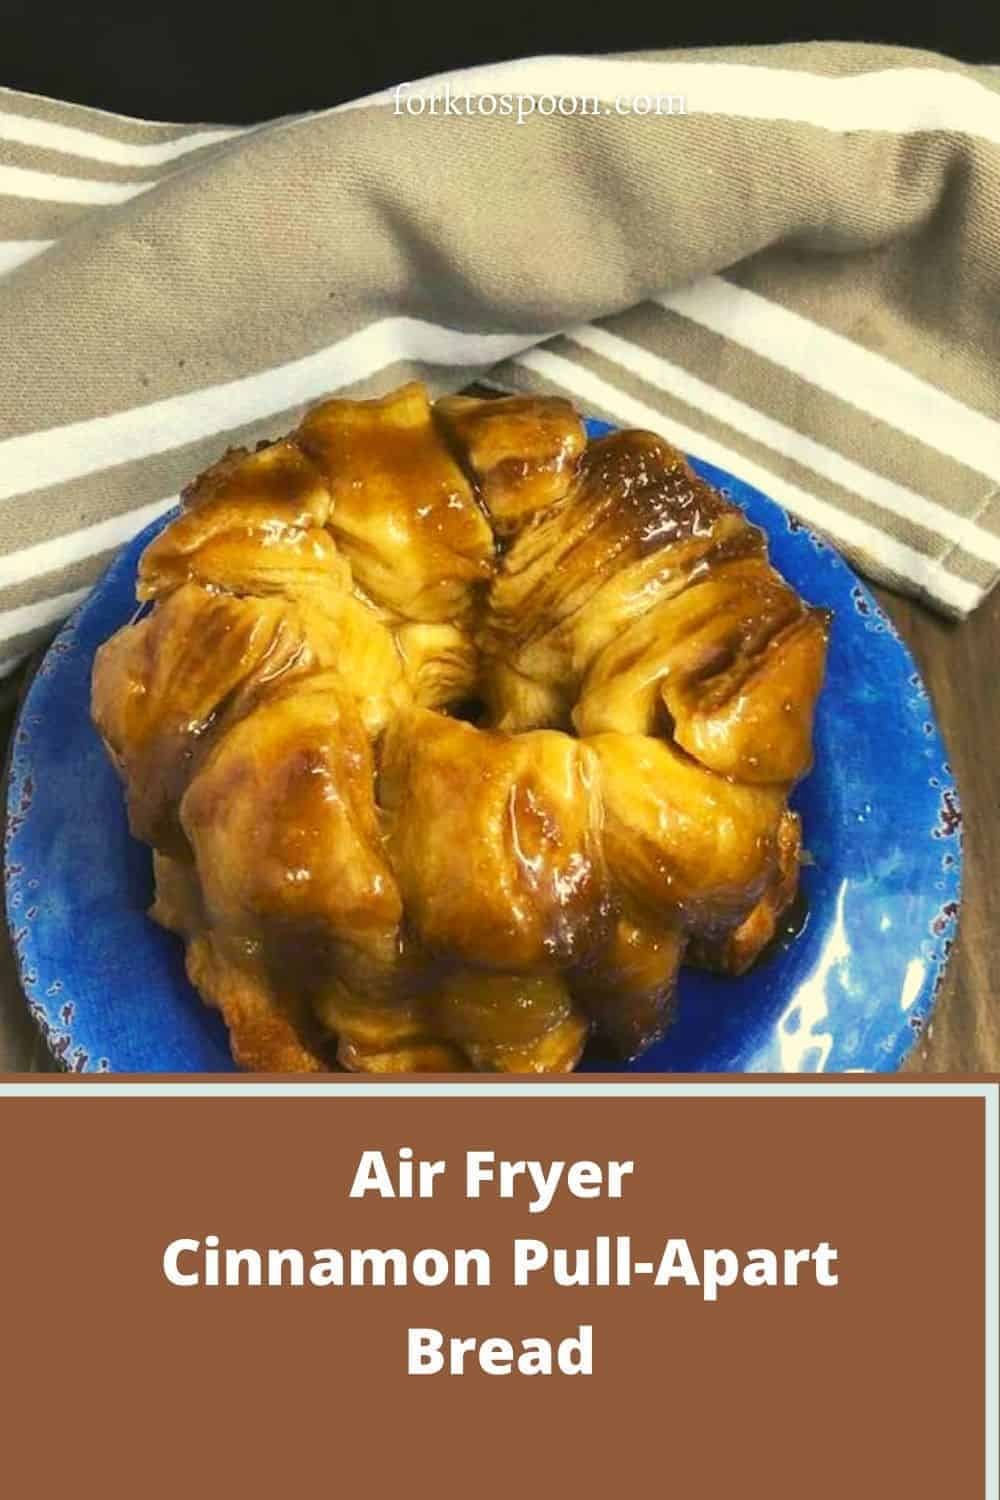 Air Fryer Cinnamon Pull-Apart Bread